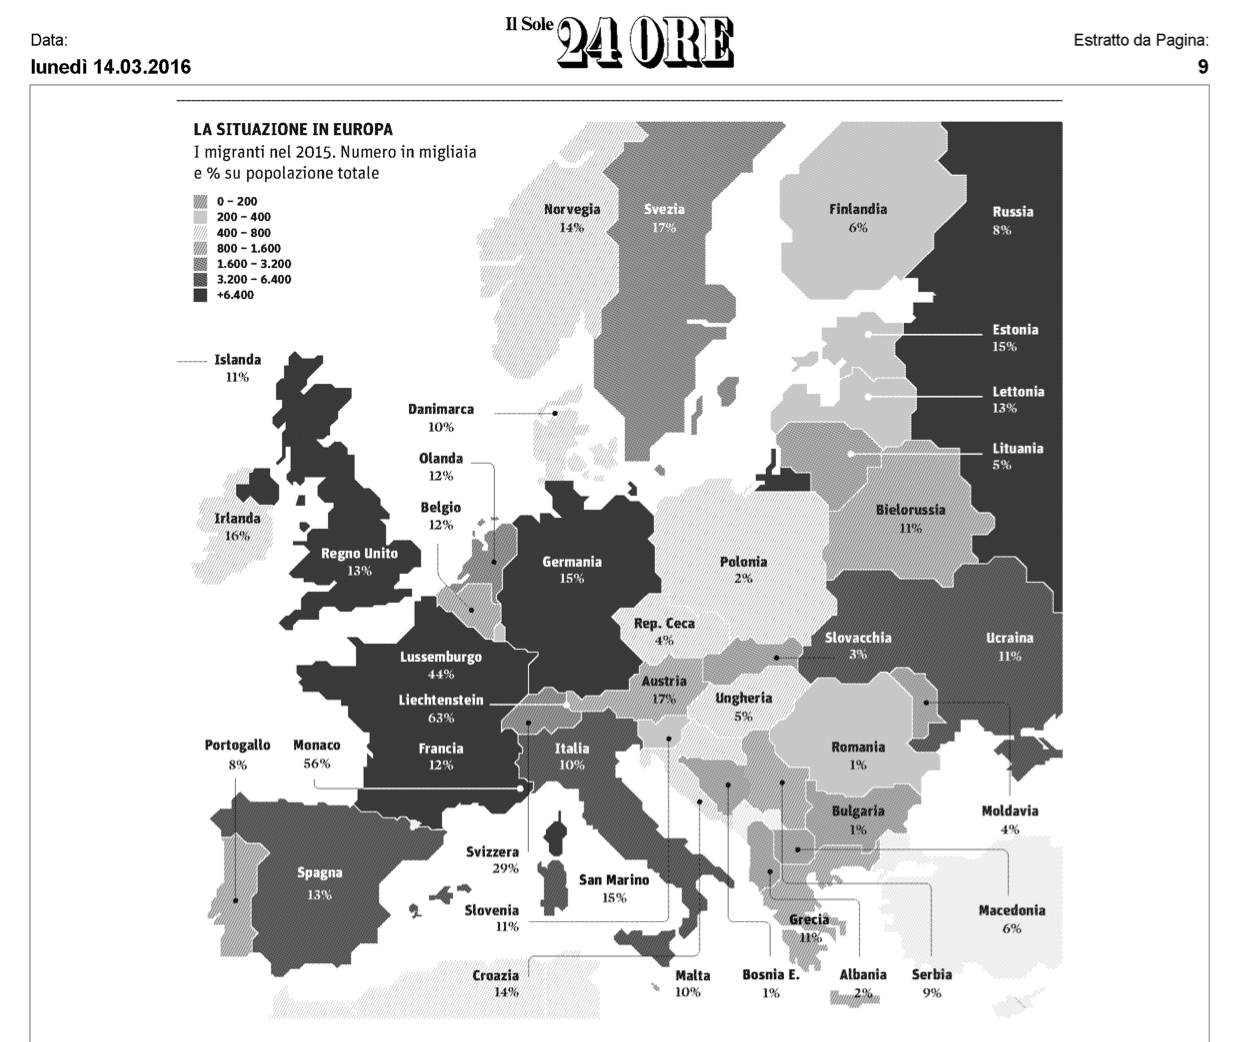 internation migration report mappa